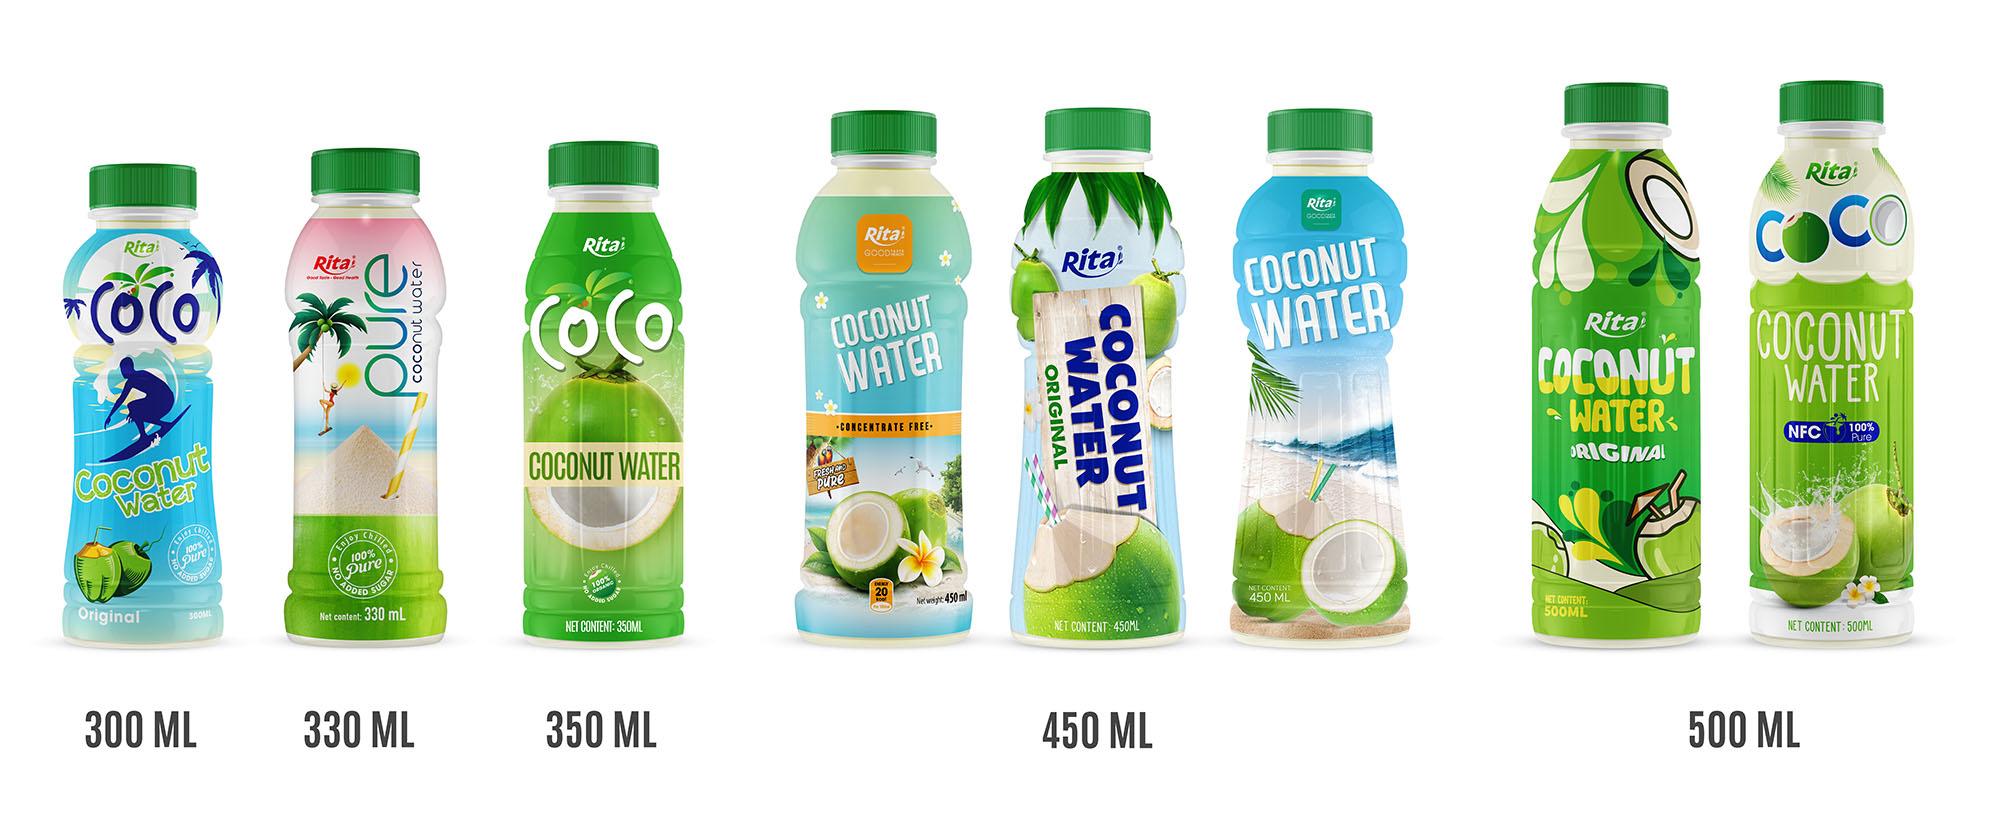 RITA brand coconut water Organic Bentre fresh drink best tasting